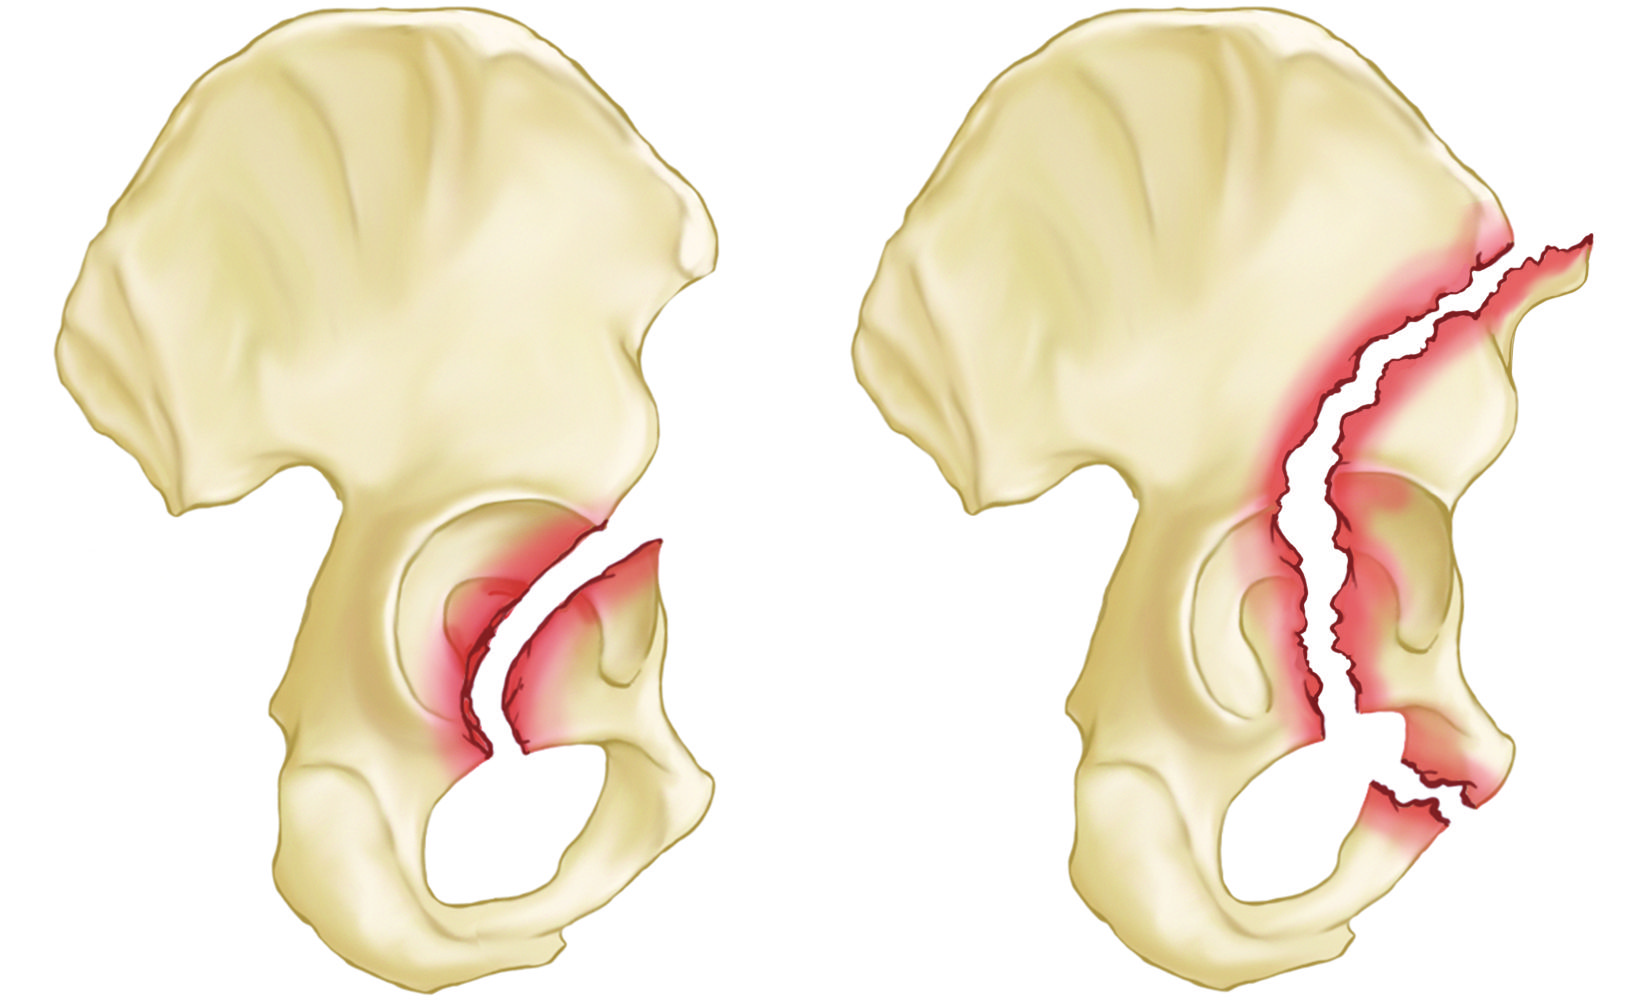 Anterior wall and anterior column acetabulum fractures